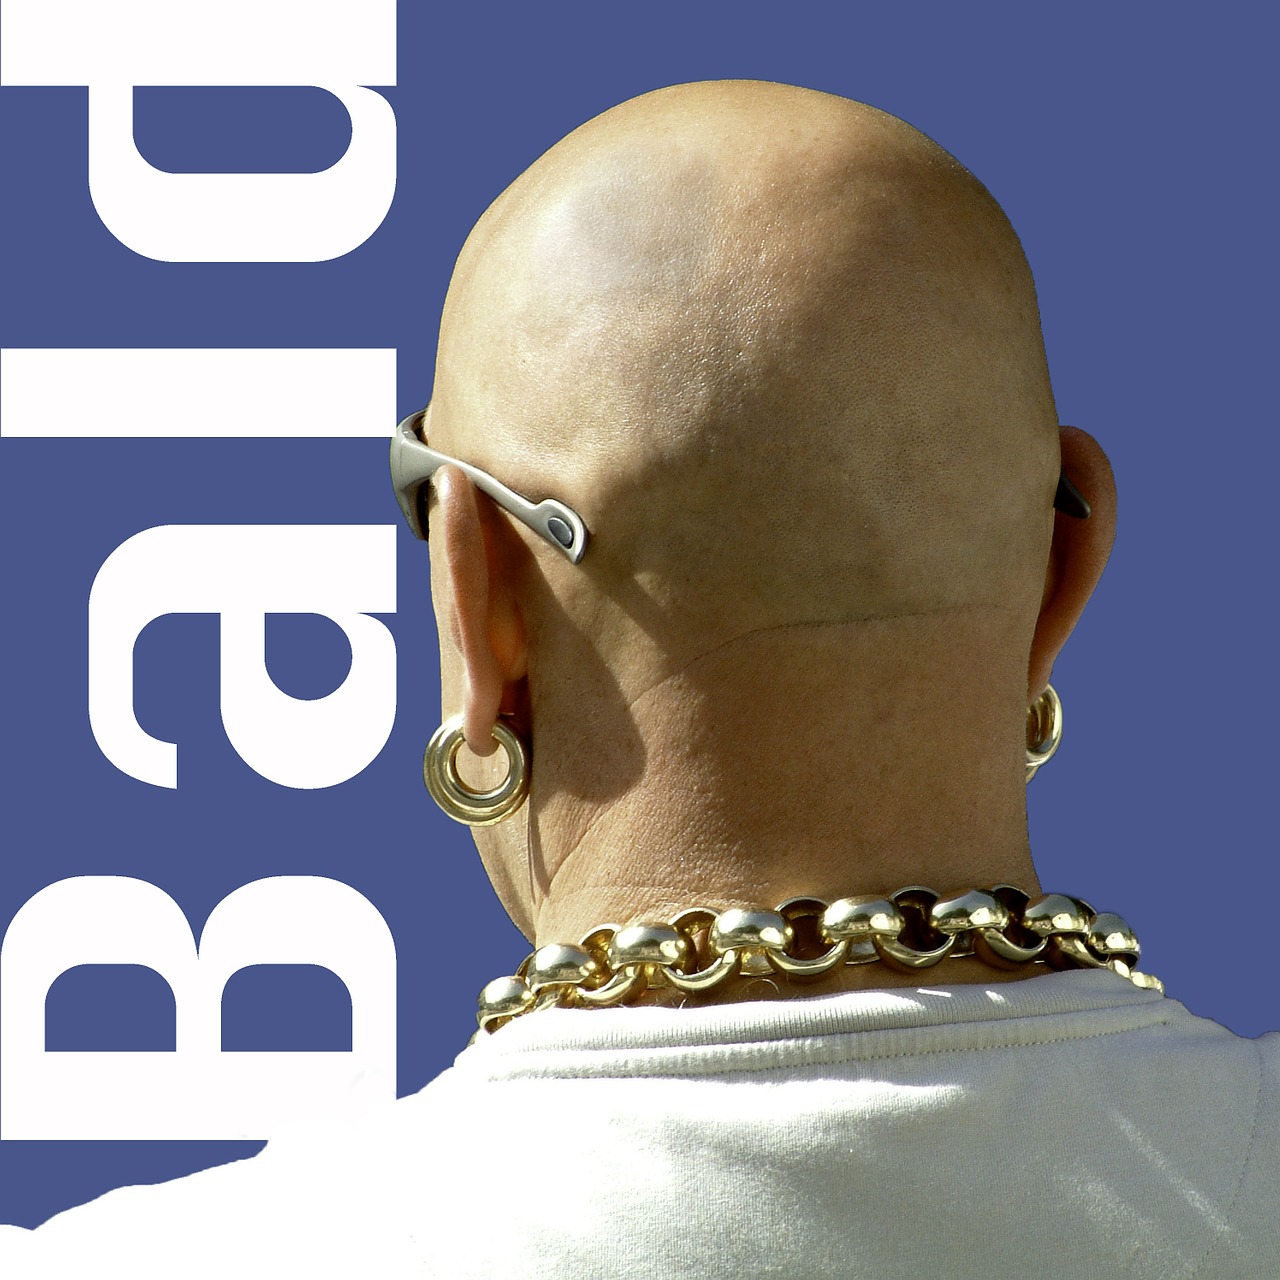 Bald,man,macho,earring,gold - free image from needpix.com